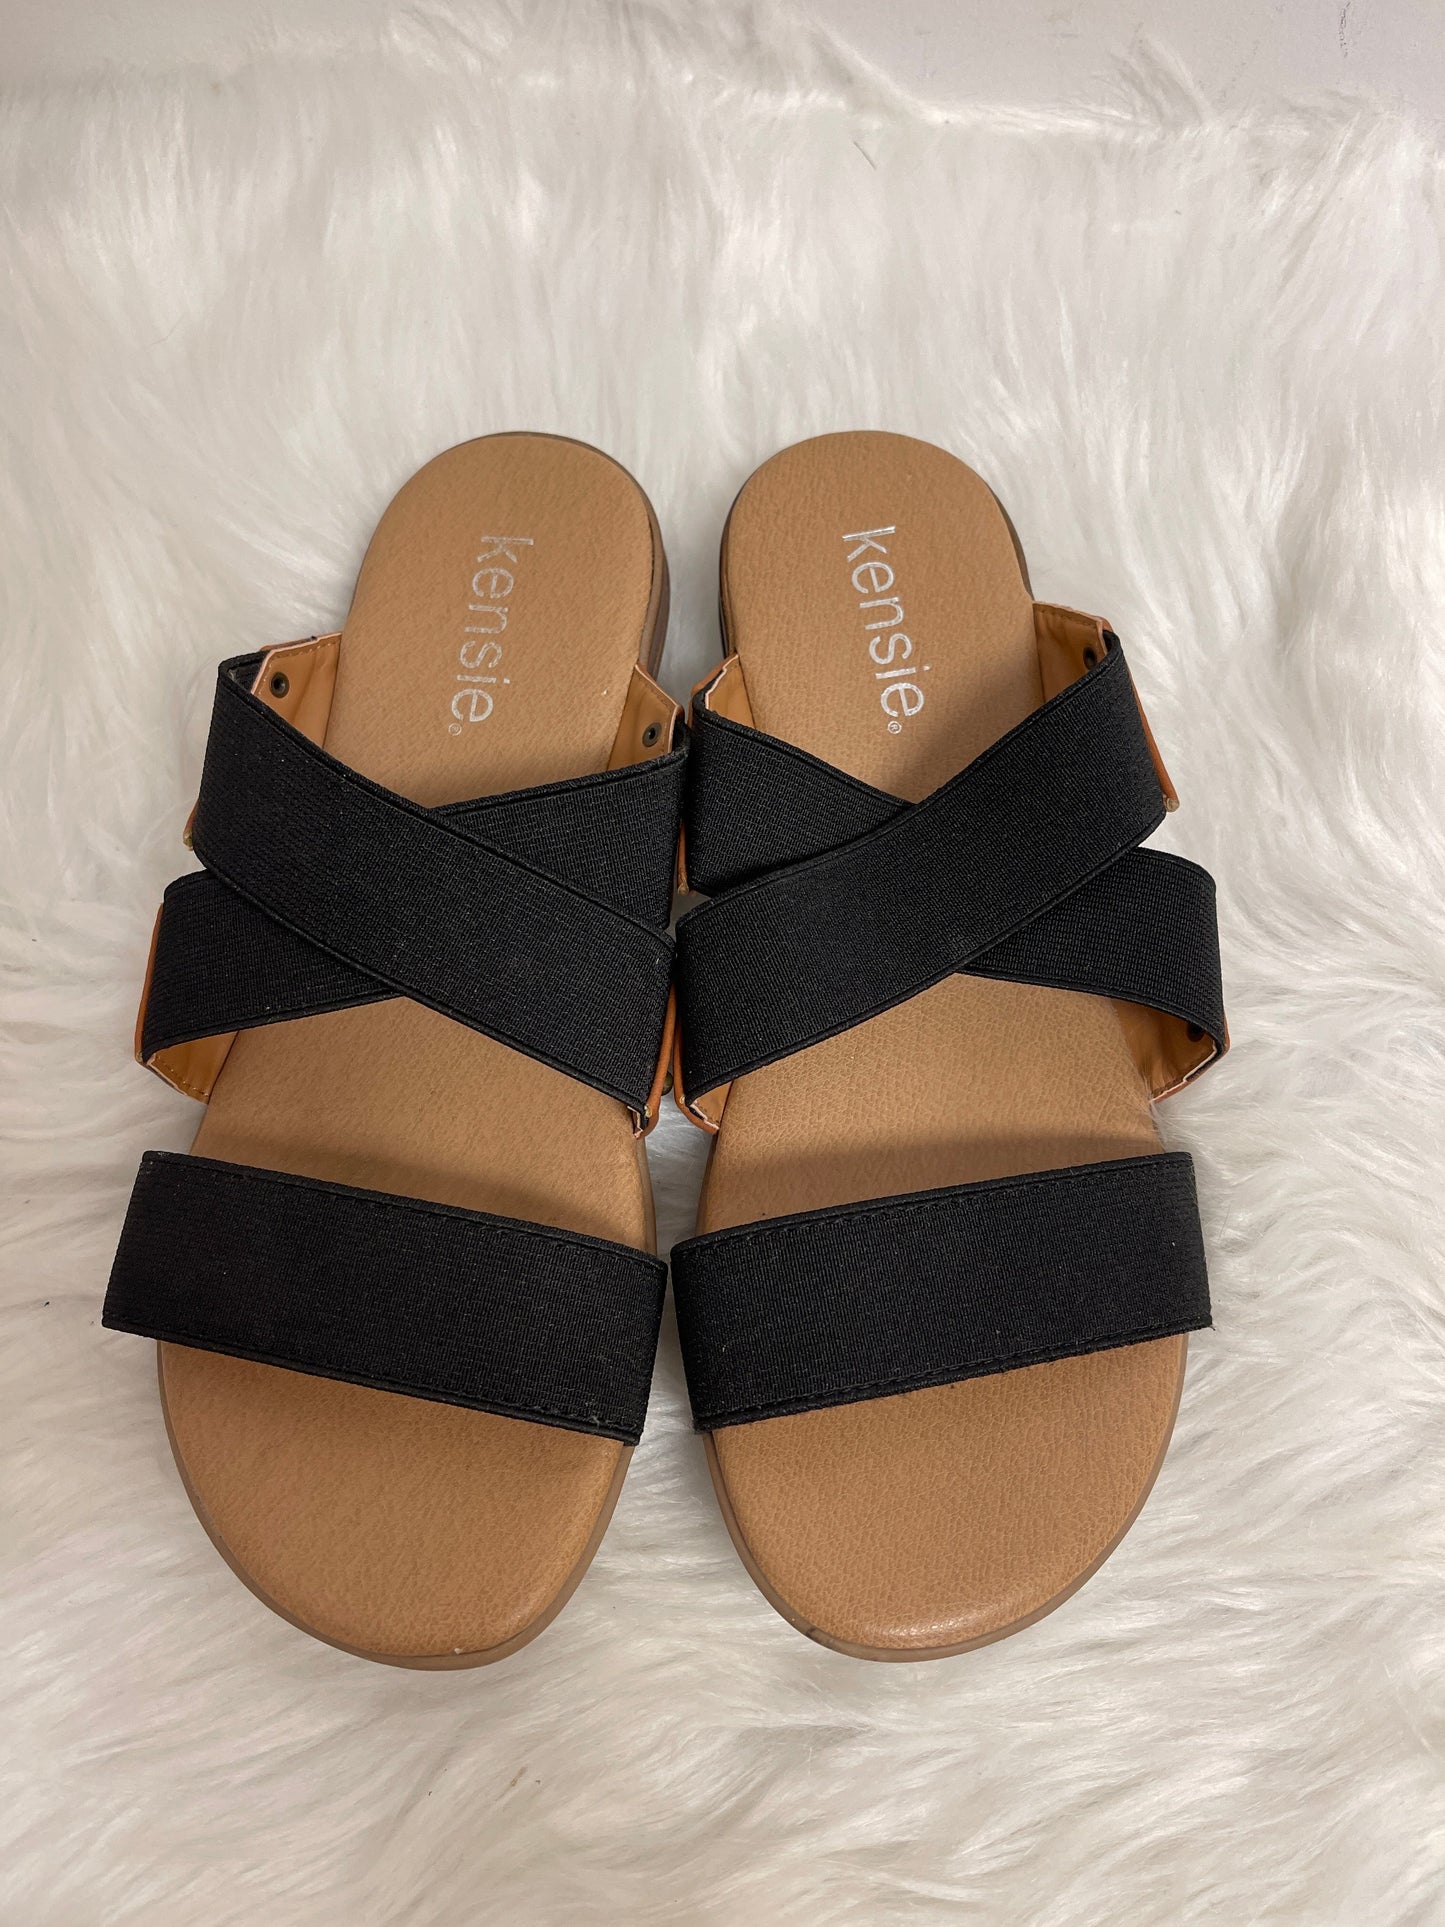 Black Sandals Flats Kensie, Size 8